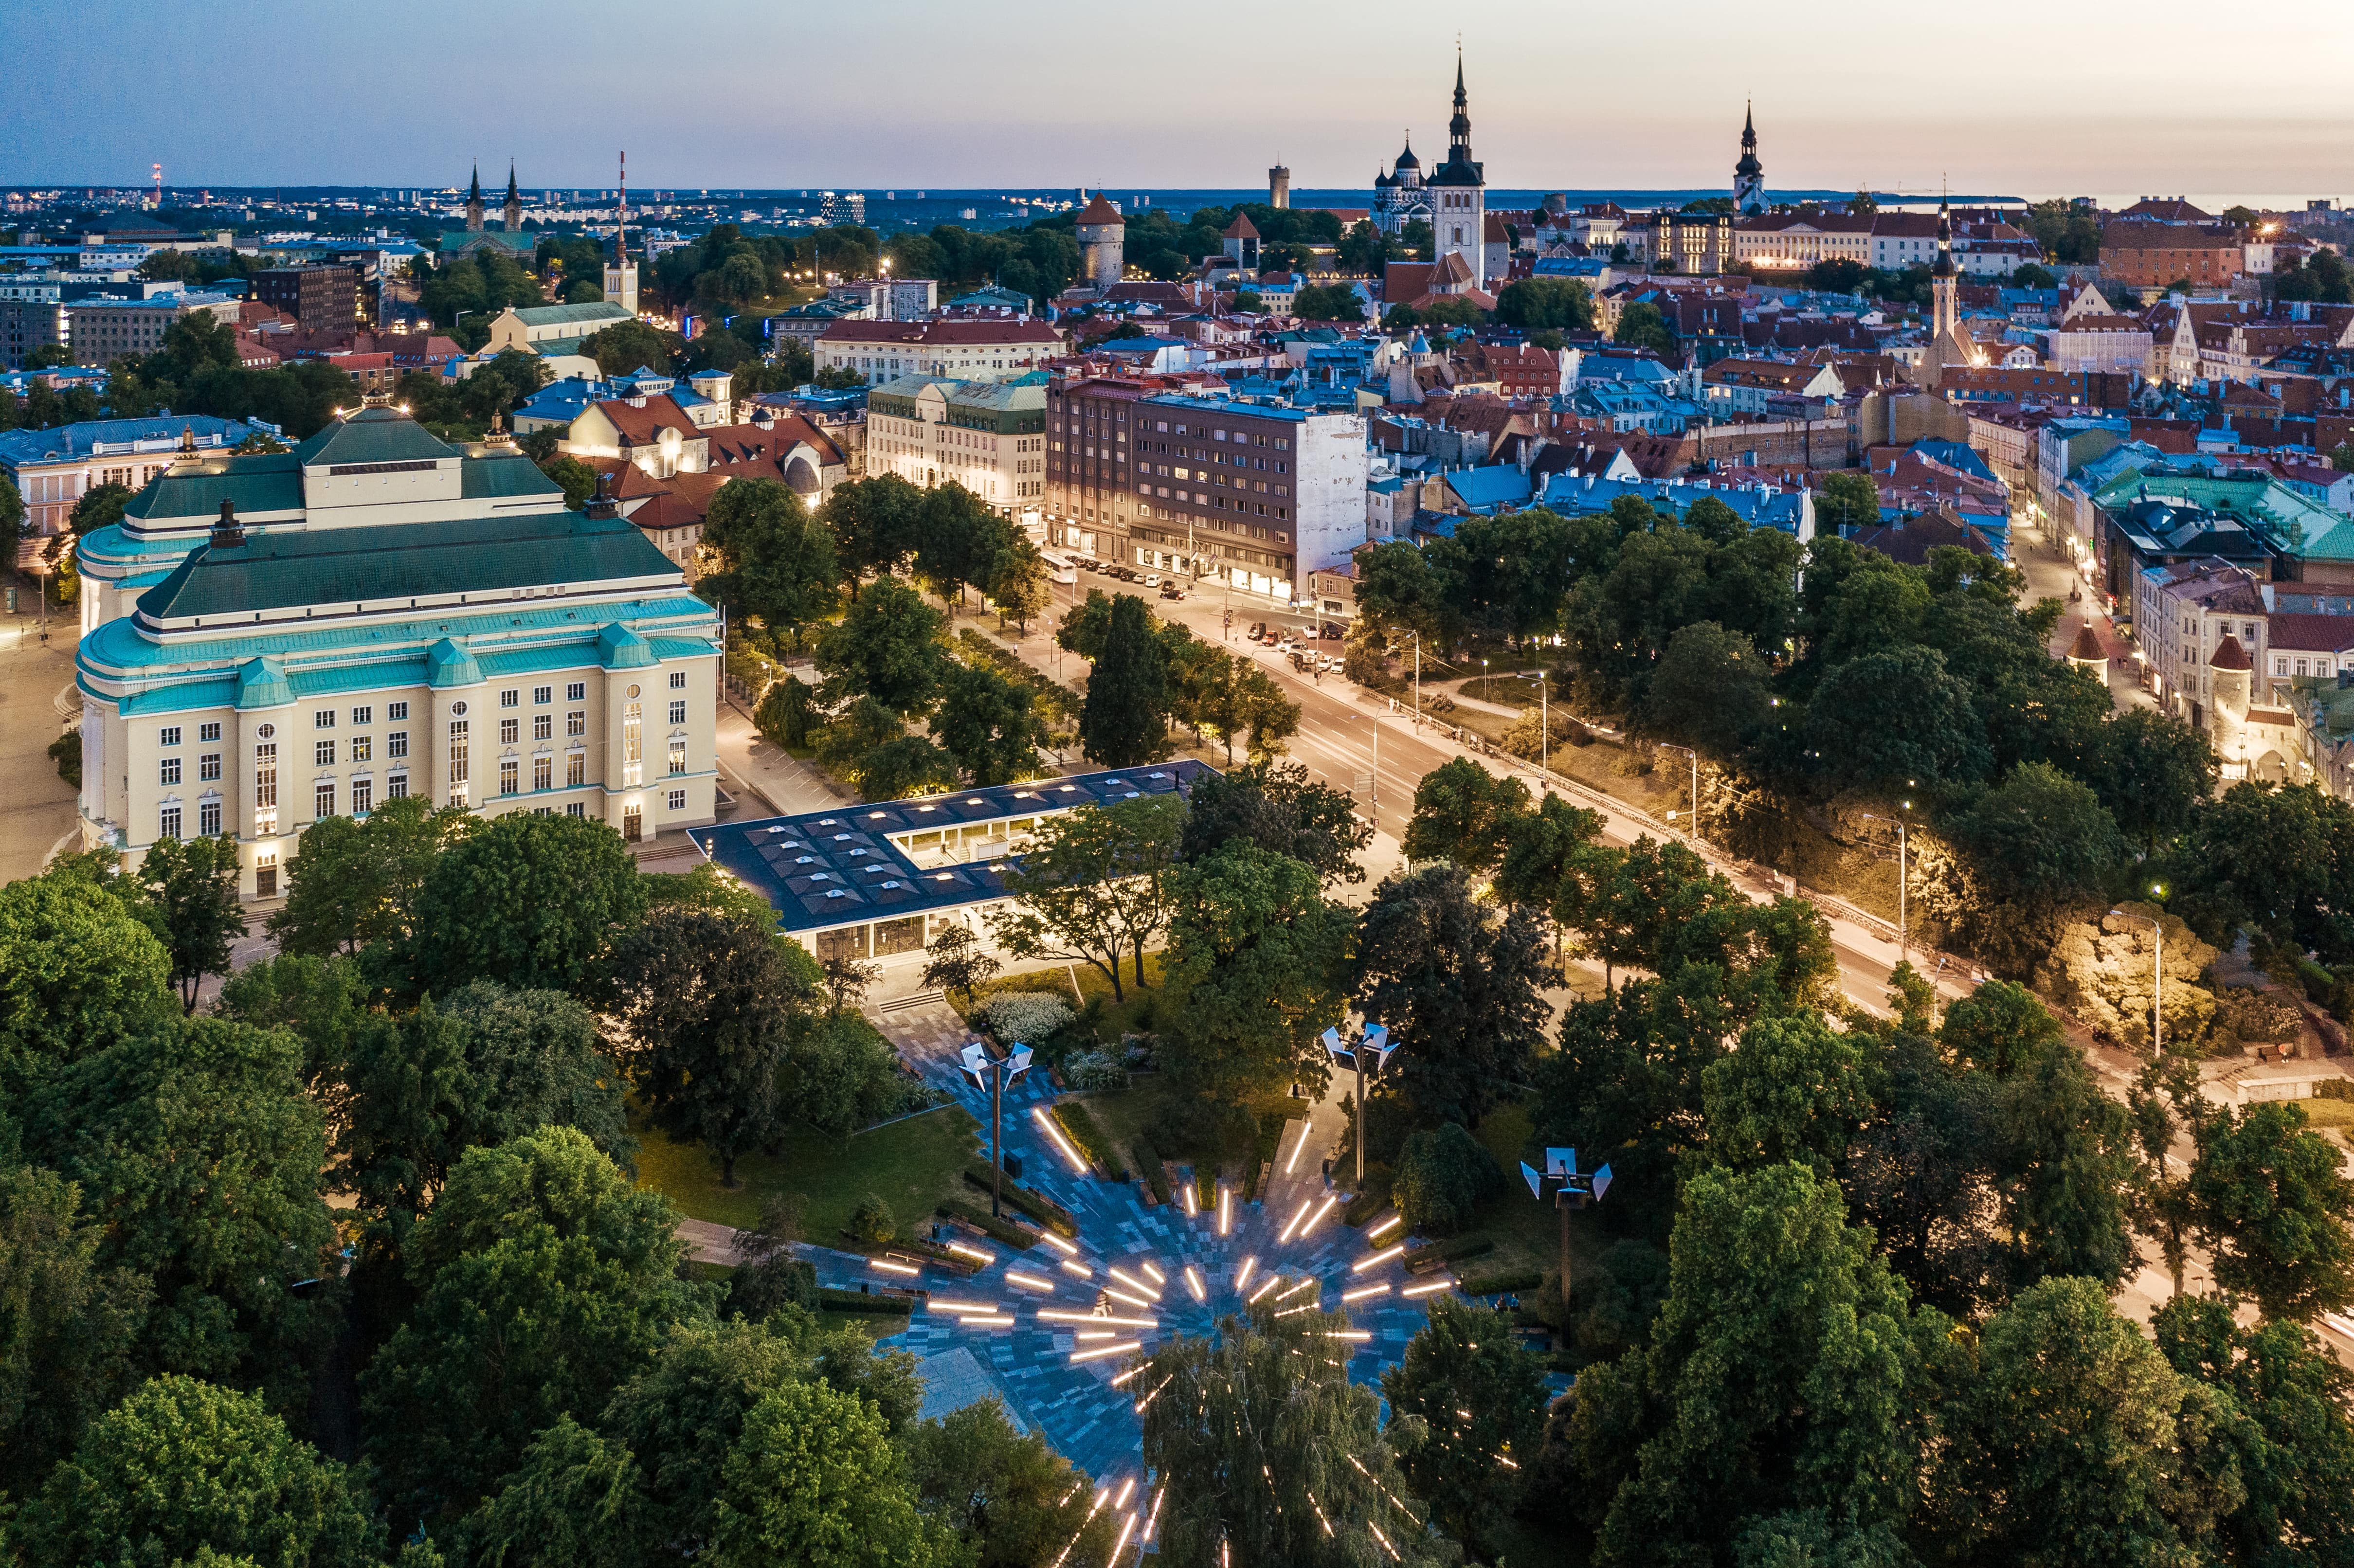 Tallinns summertime white nights